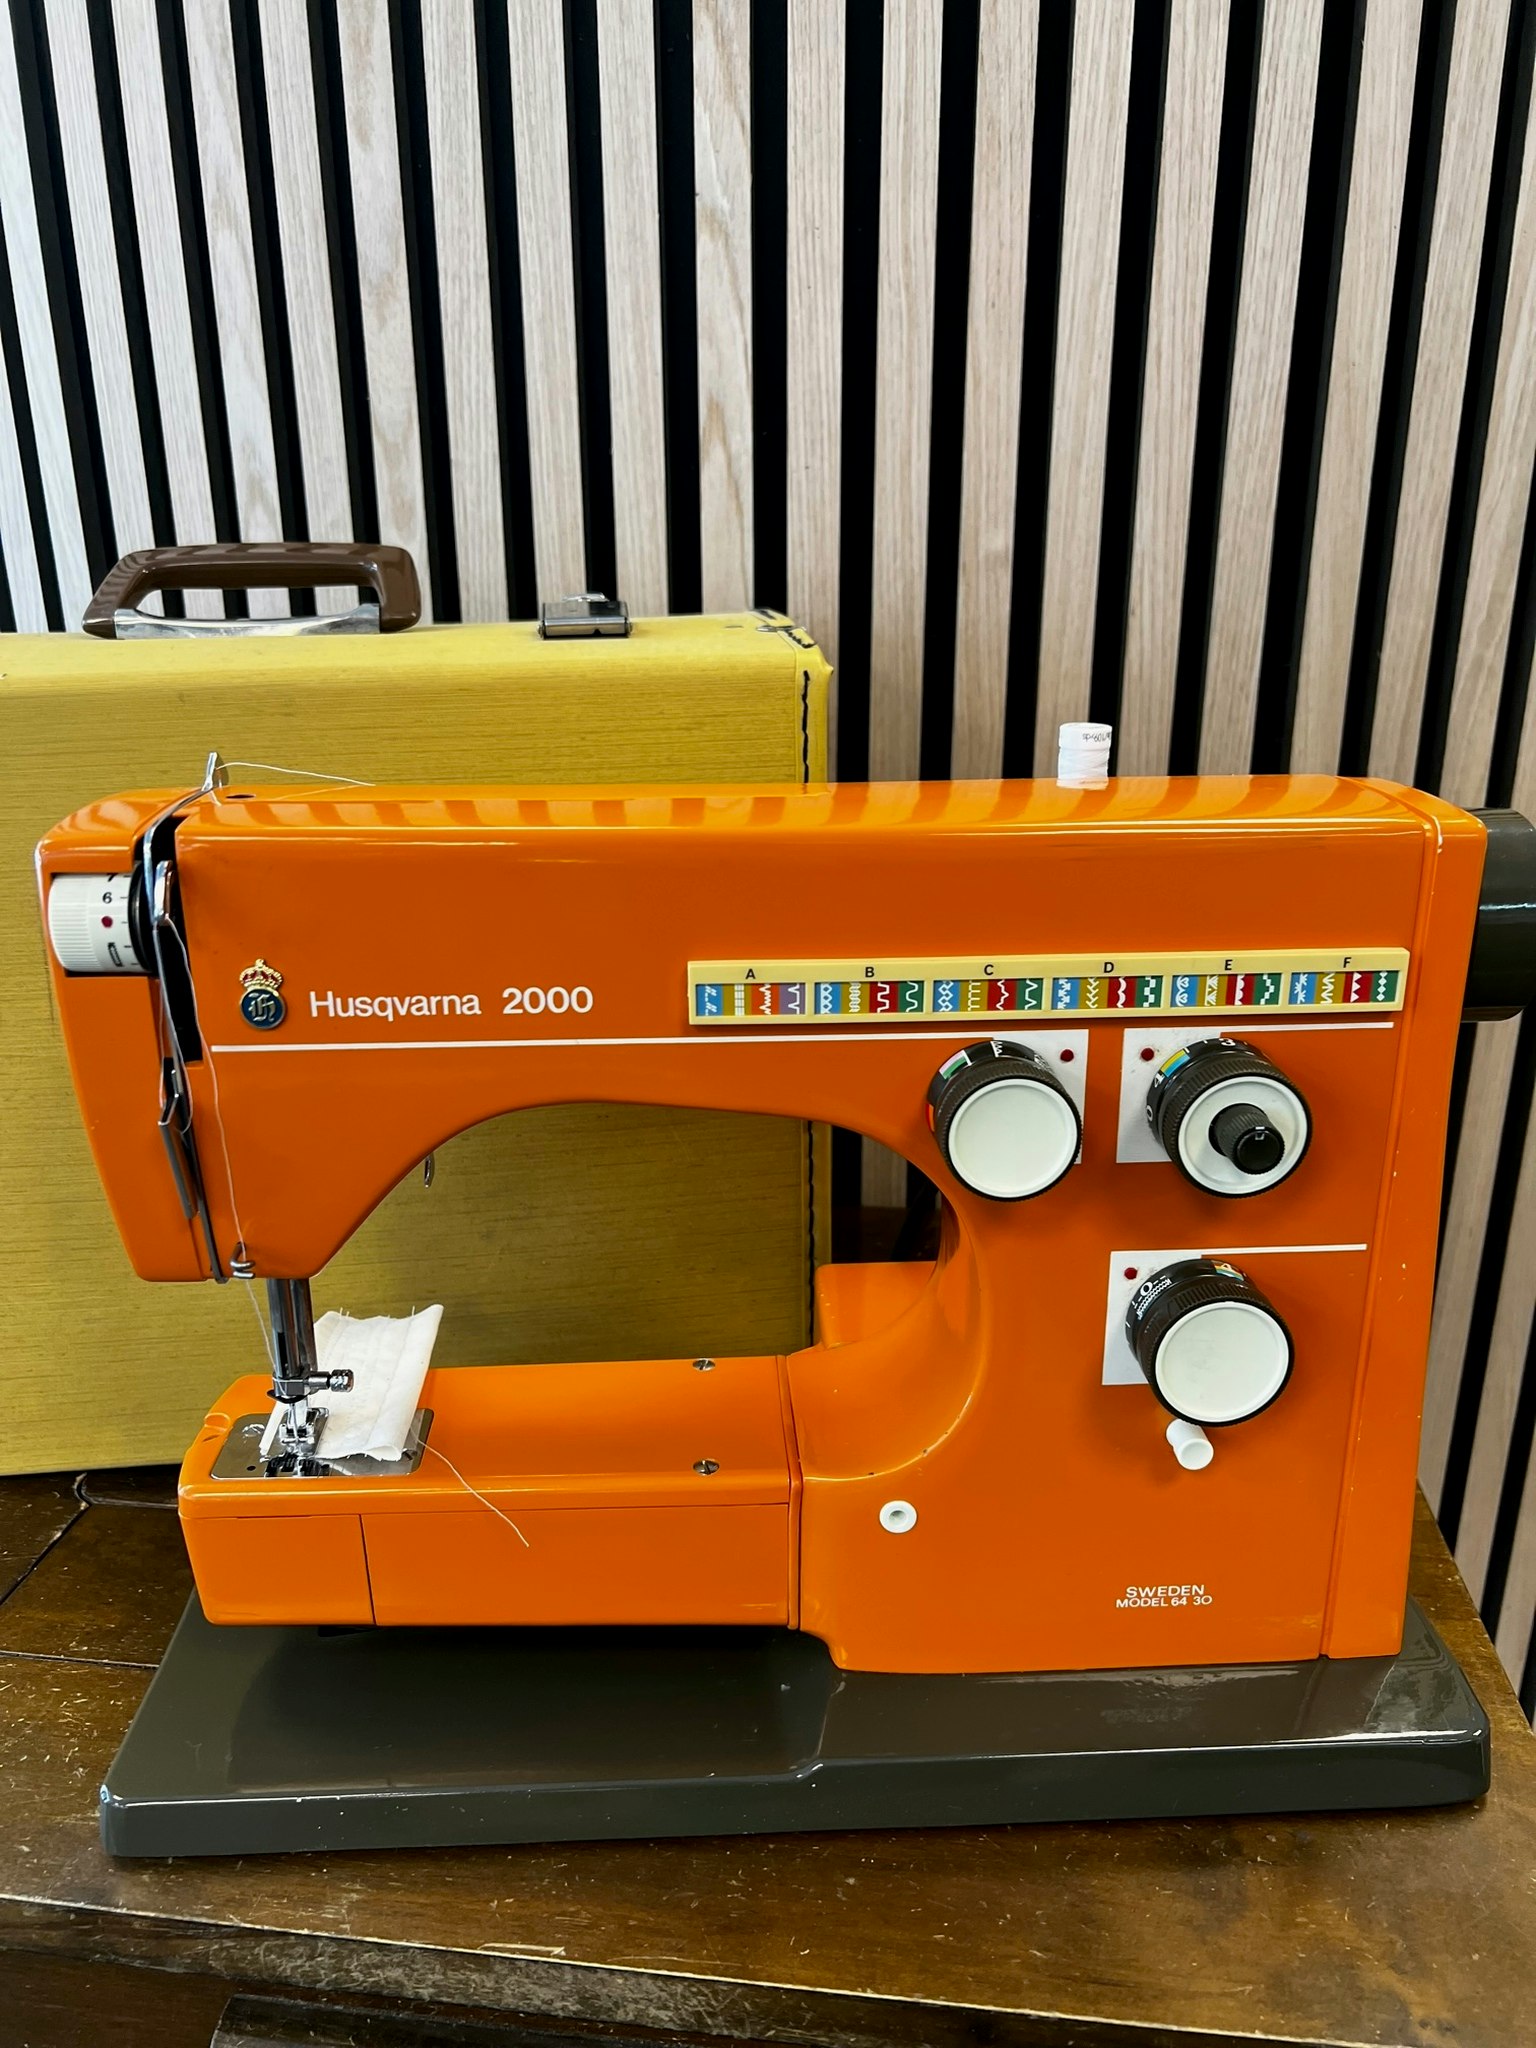 Husqvarna 2000 - Experter på symaskiner – Symaskinshörnet Linköping